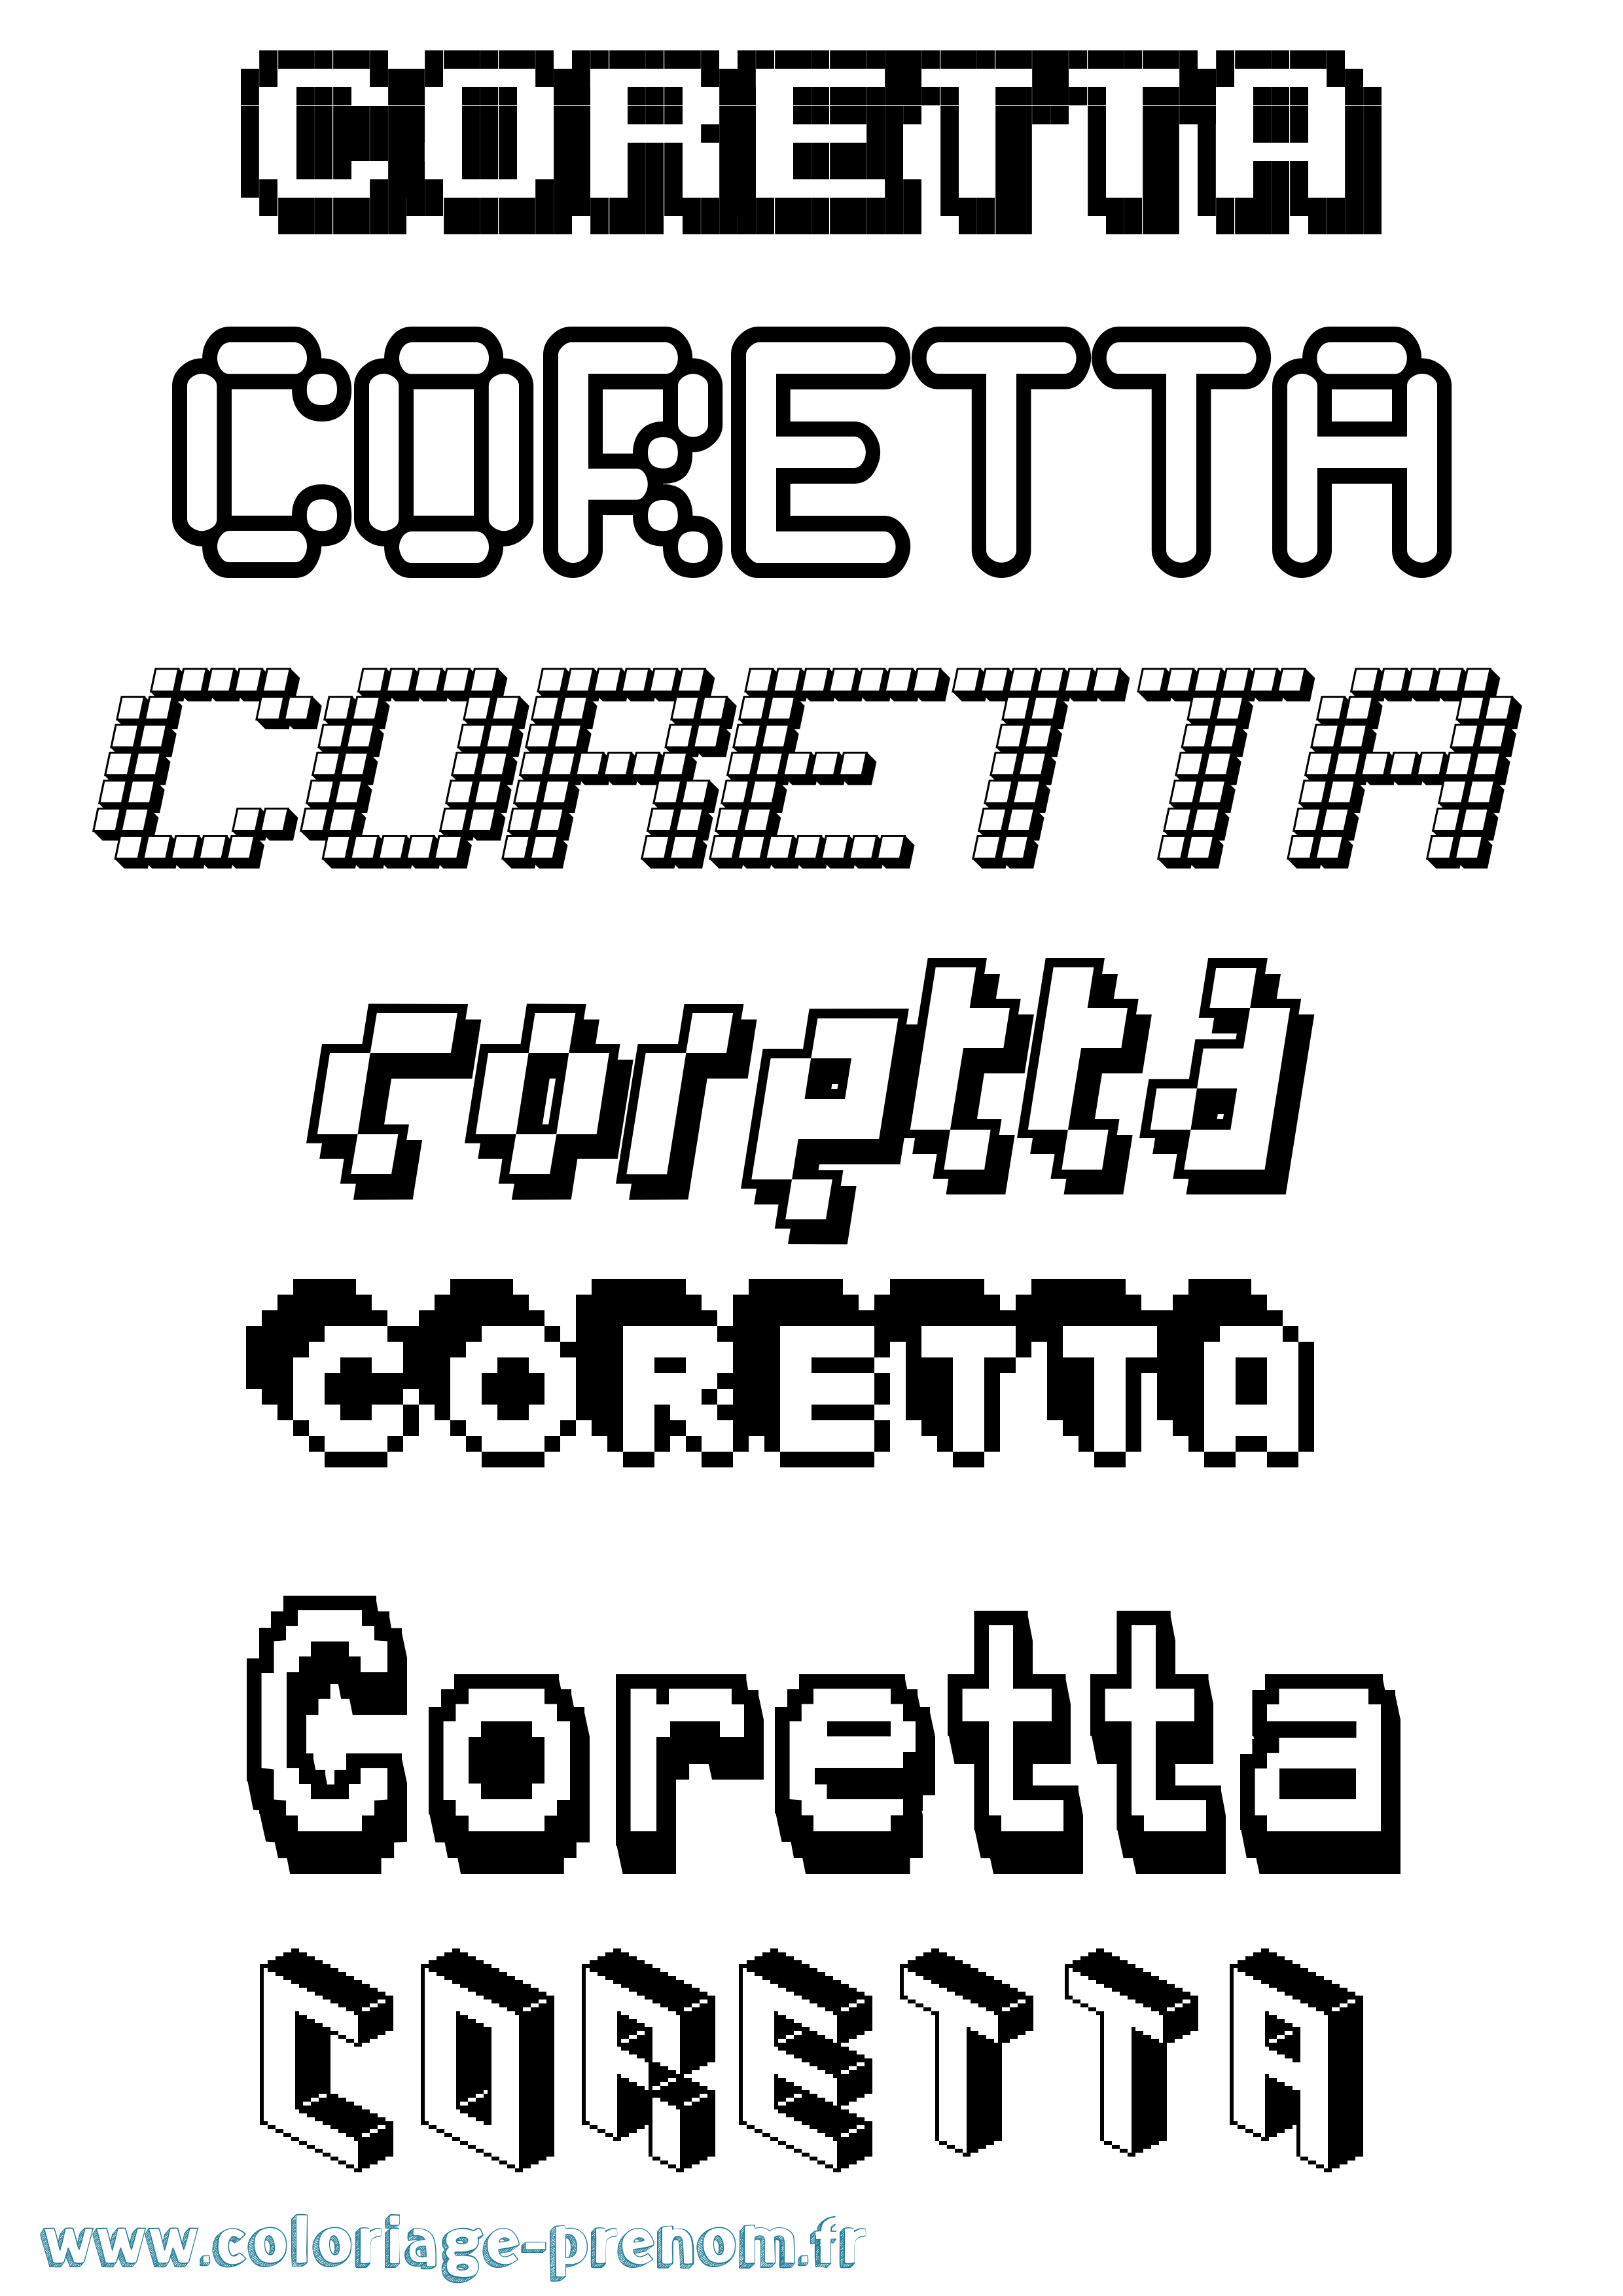 Coloriage prénom Coretta Pixel